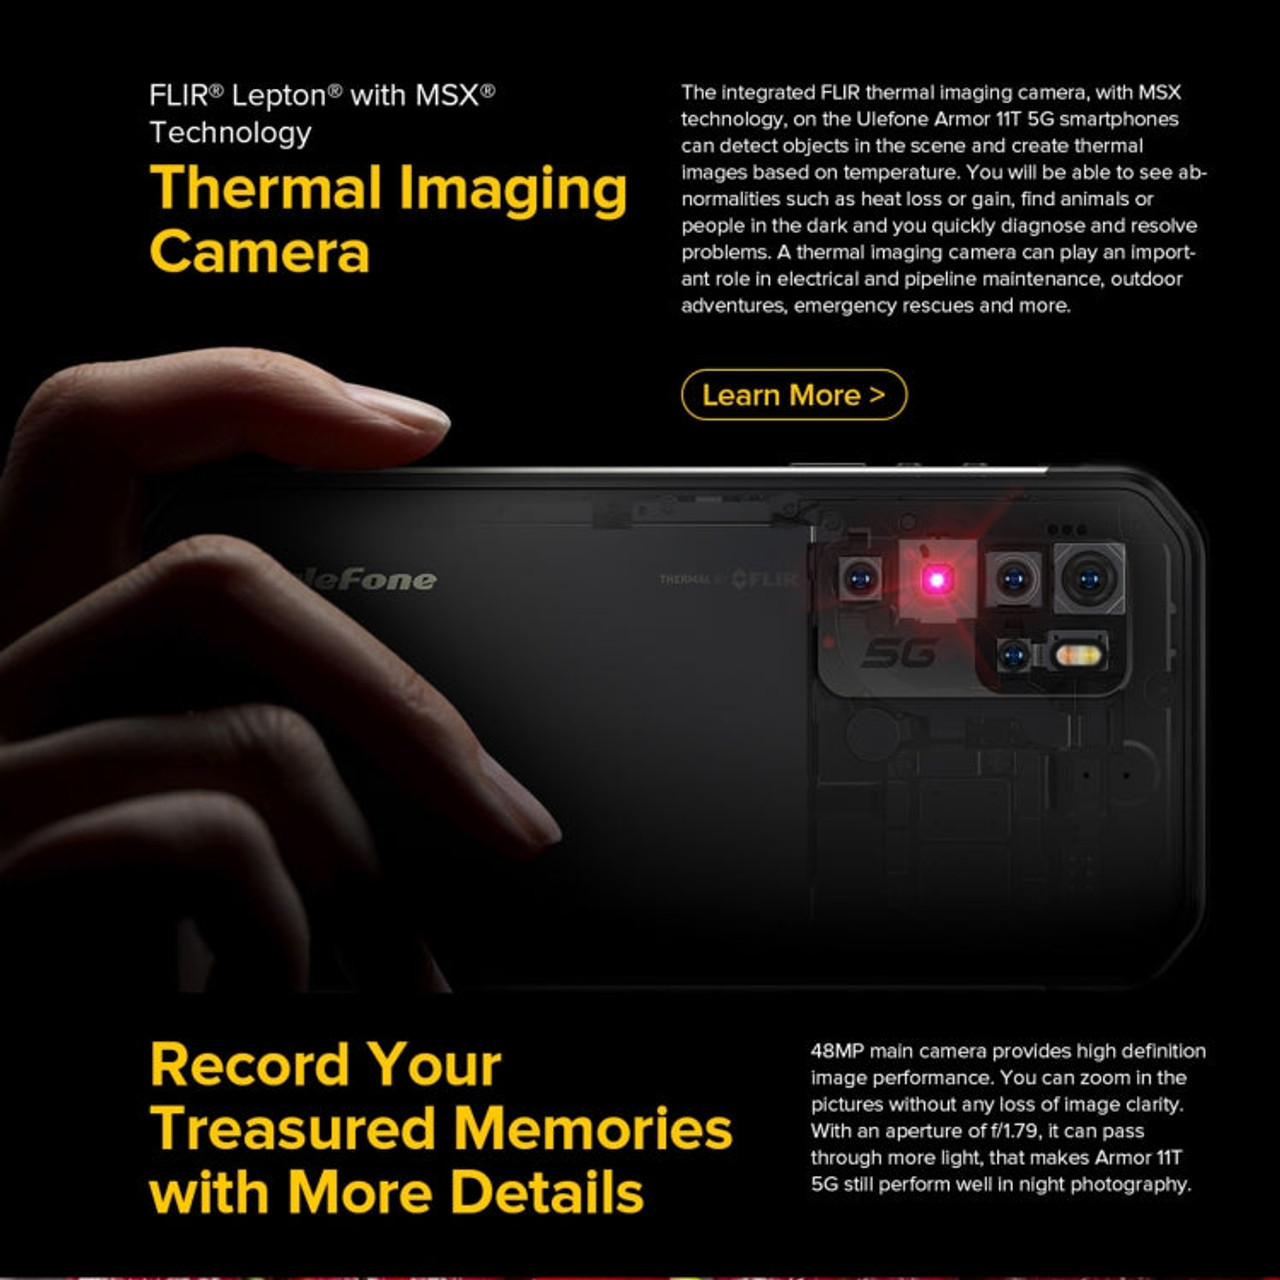 Ulefone Armor 11T 5G Rugged Phone, Thermal Imaging Camera, 8GB+256GB